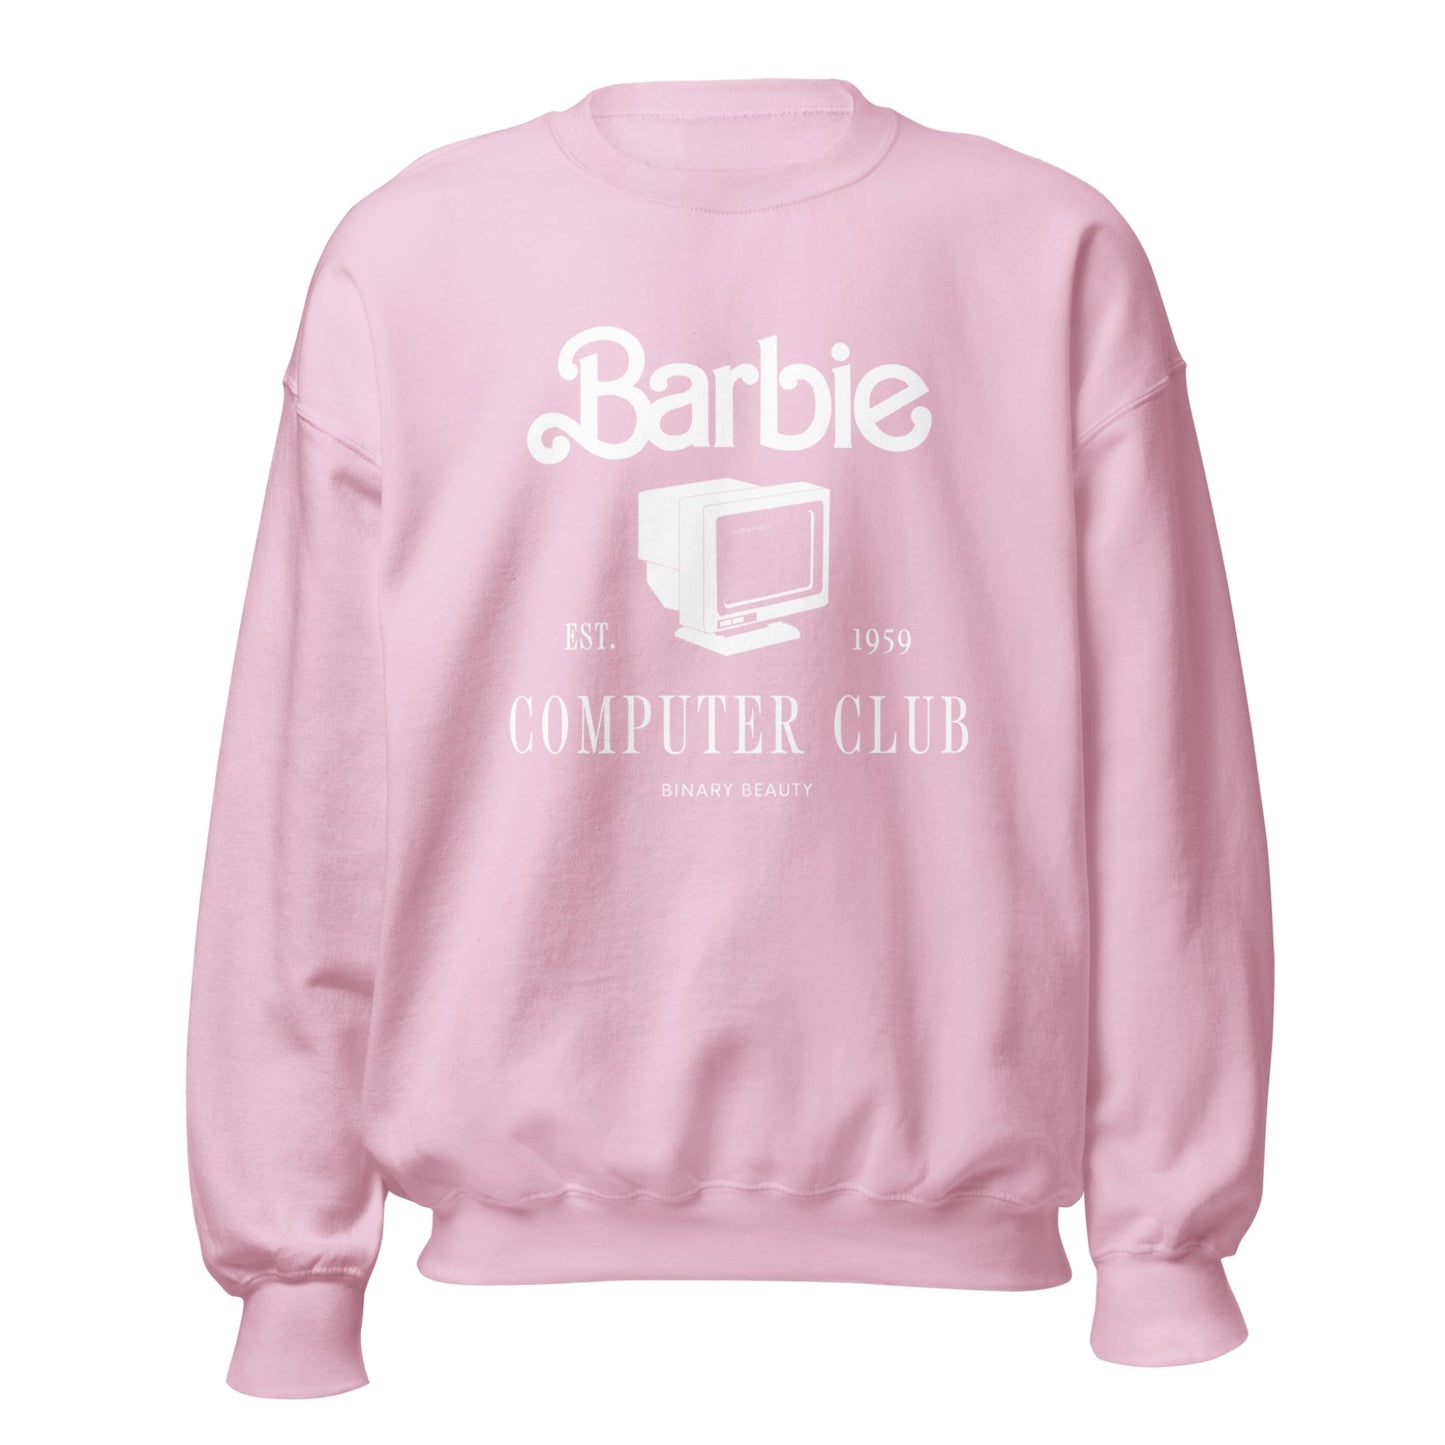 BRB Computer Club Crewneck in Pink